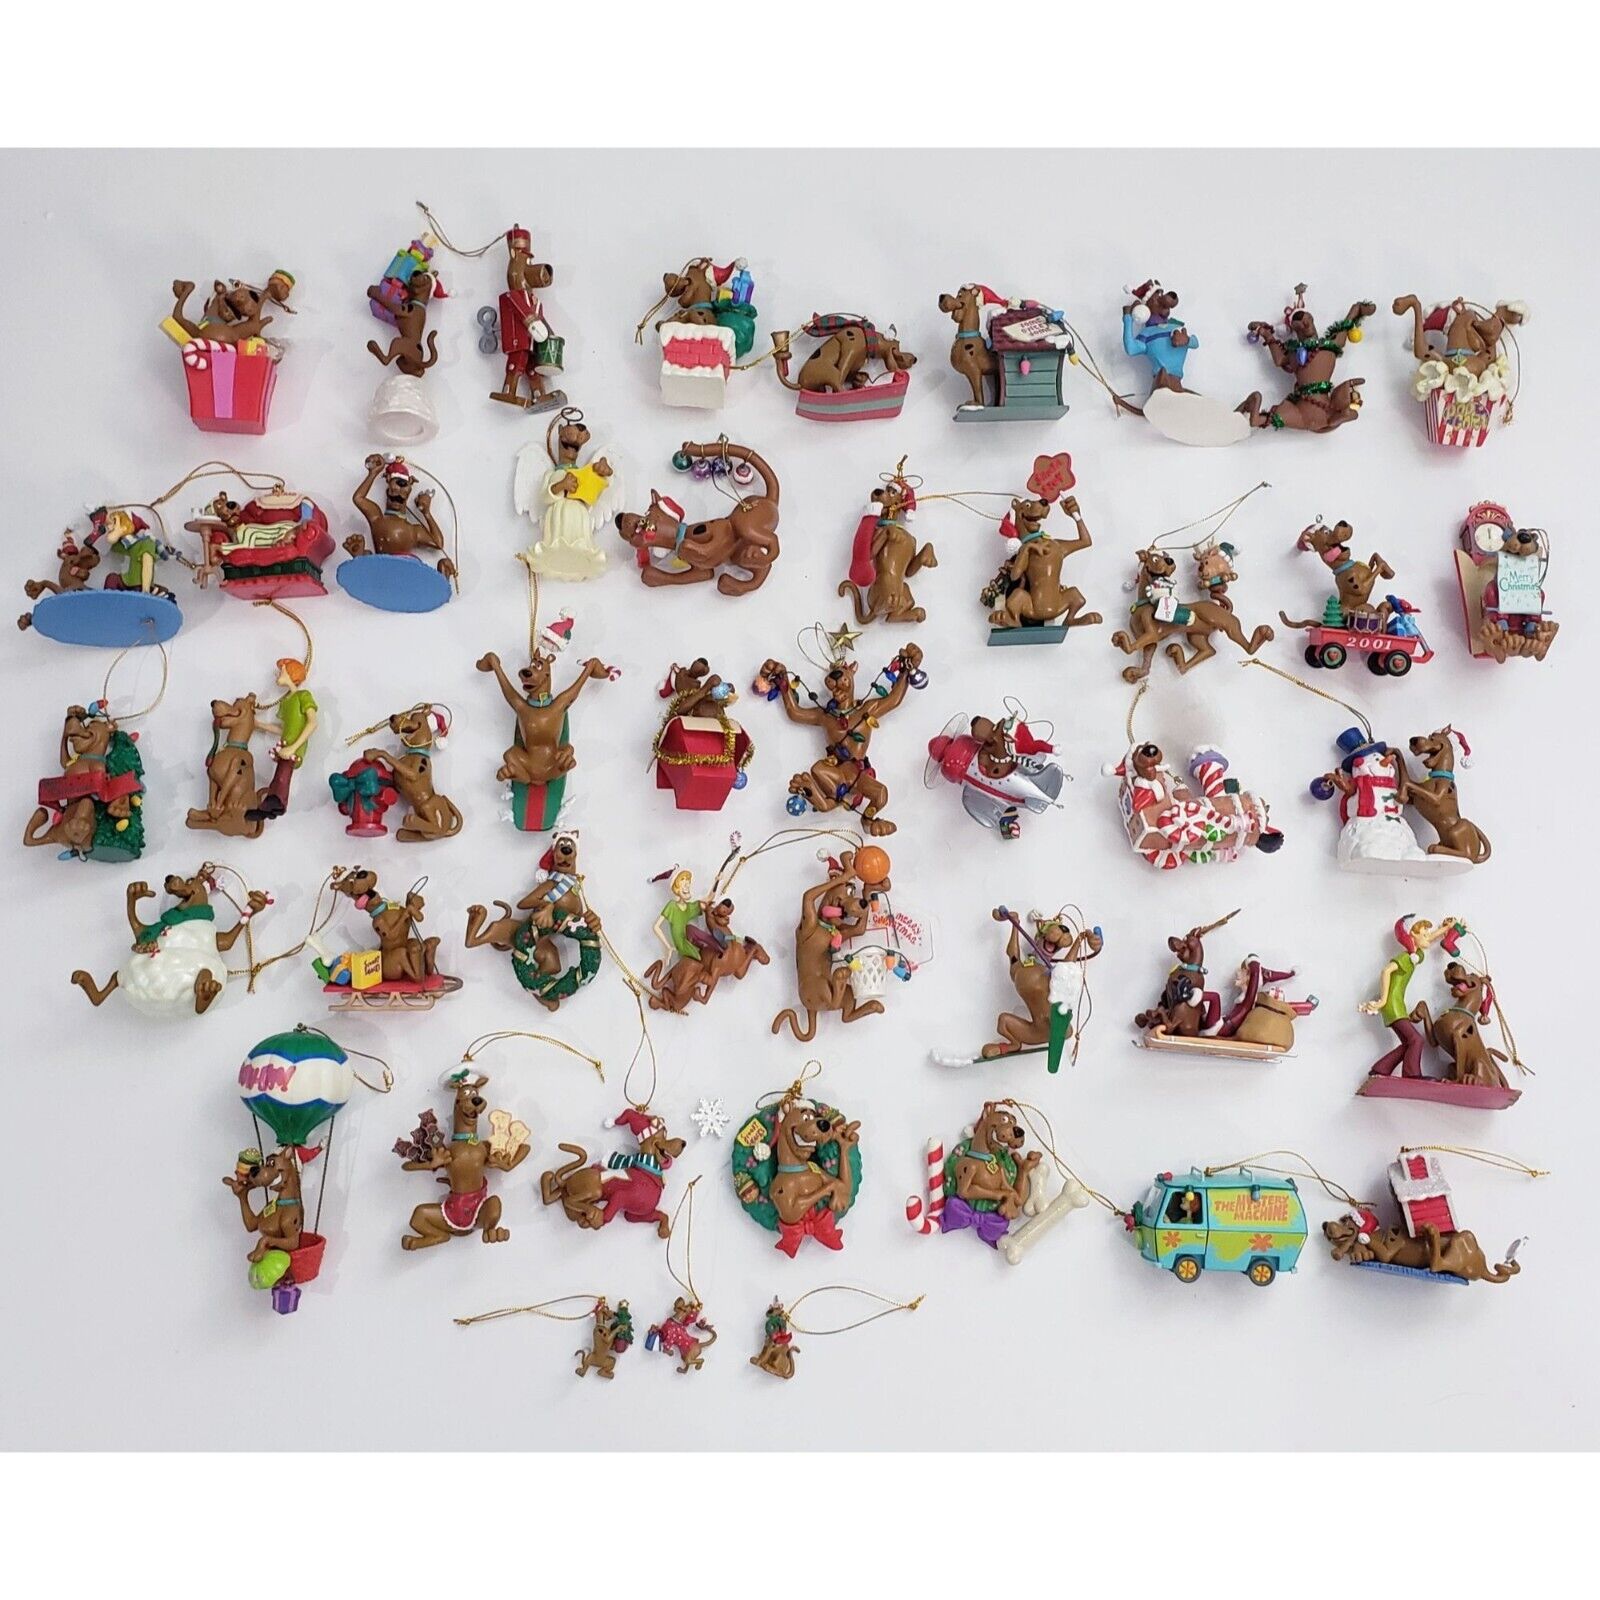 46 Vintage Scooby Doo Christmas Ornaments Hanna Barbara Hallmark Keepsake & More